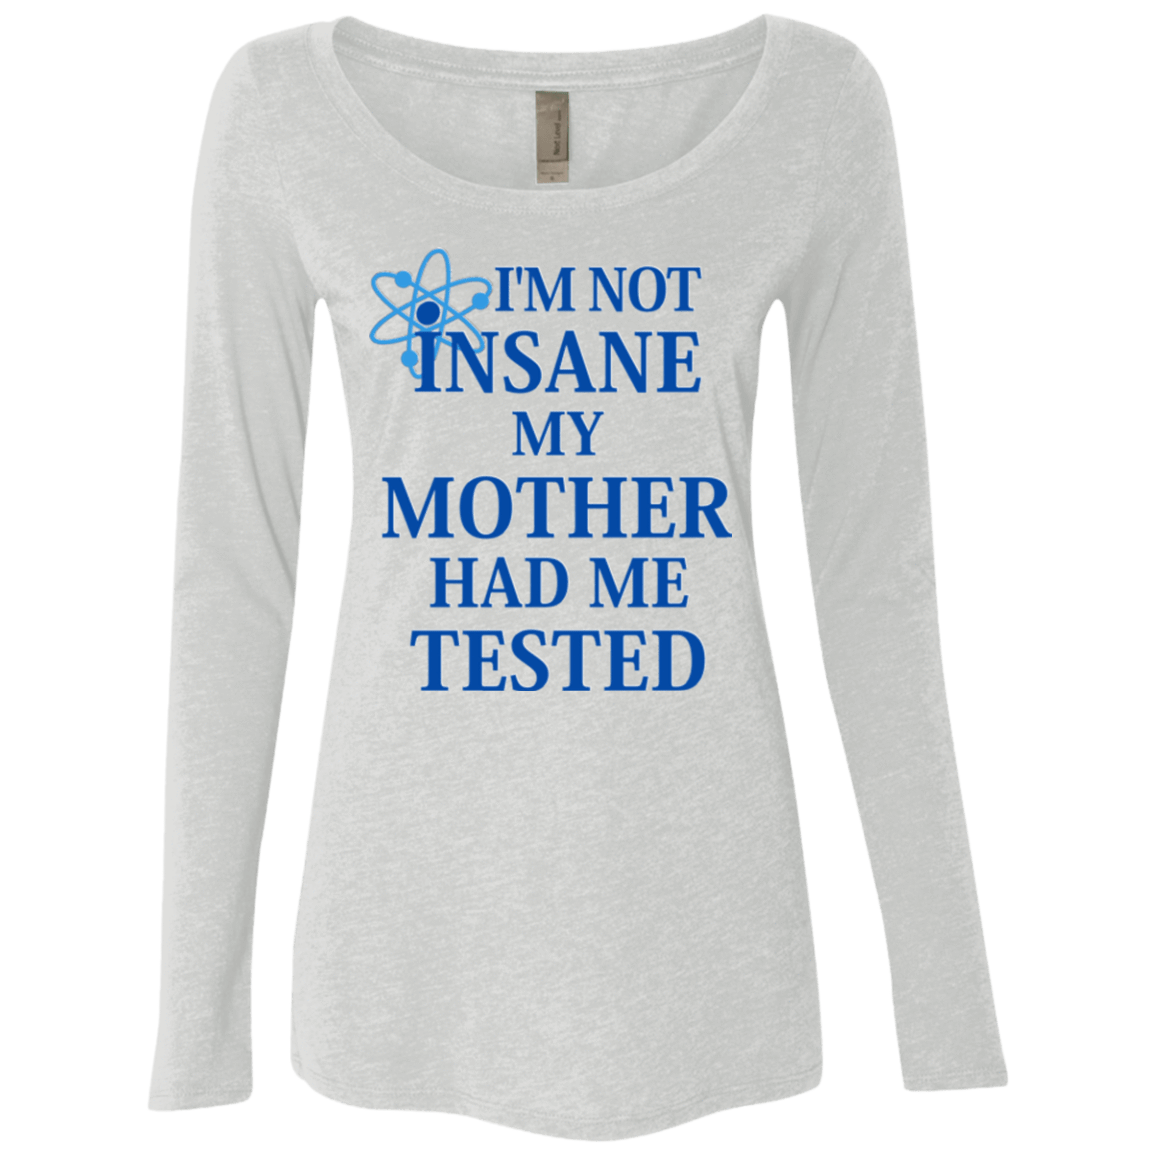 T-Shirts Heather White / Small Not insane Women's Triblend Long Sleeve Shirt